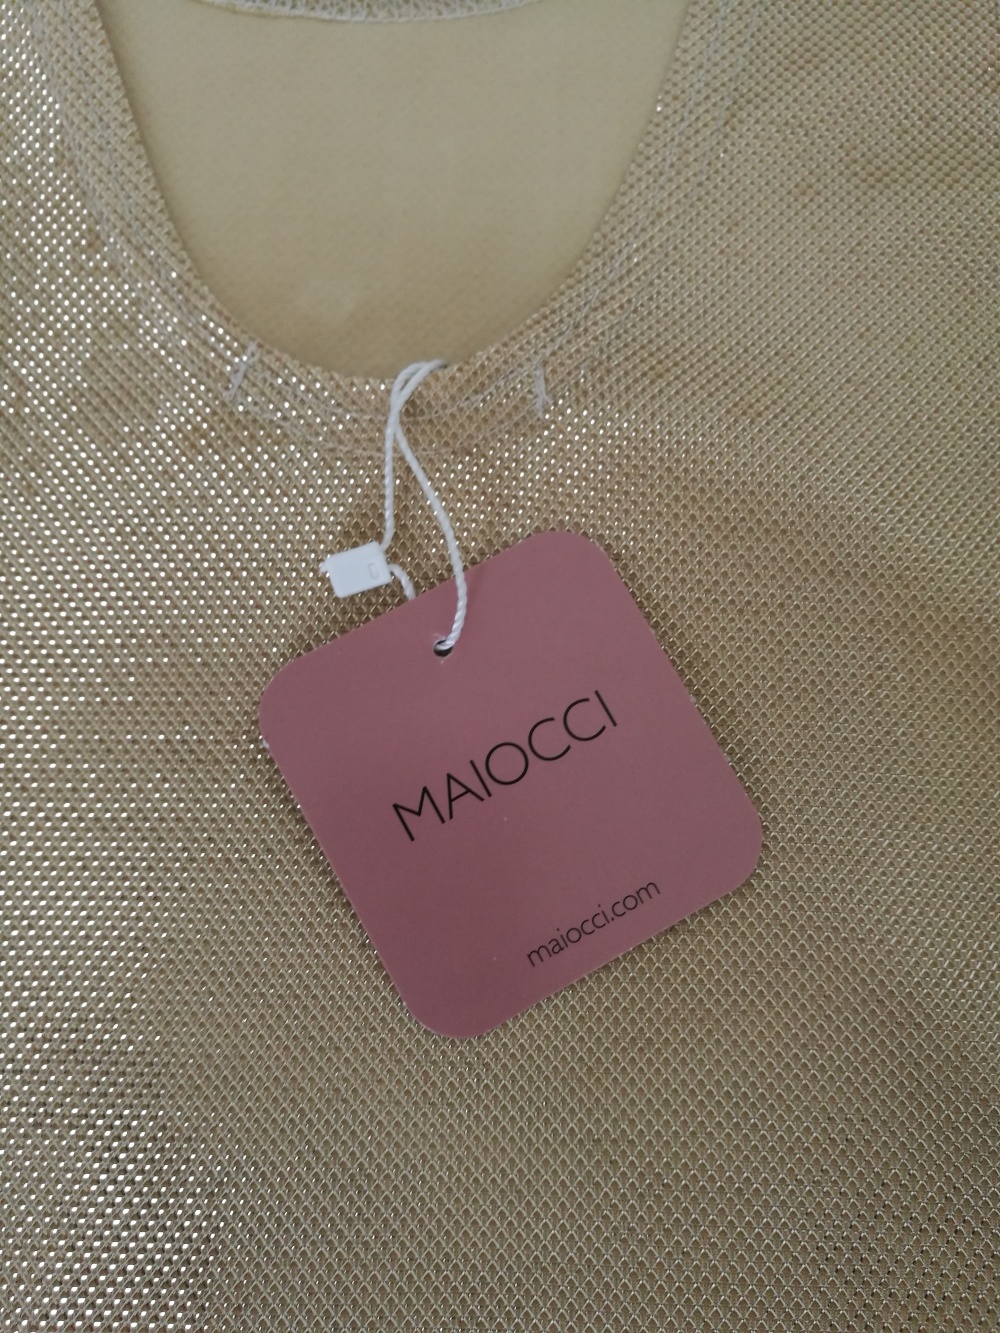 Платье, Maiocci, размер М